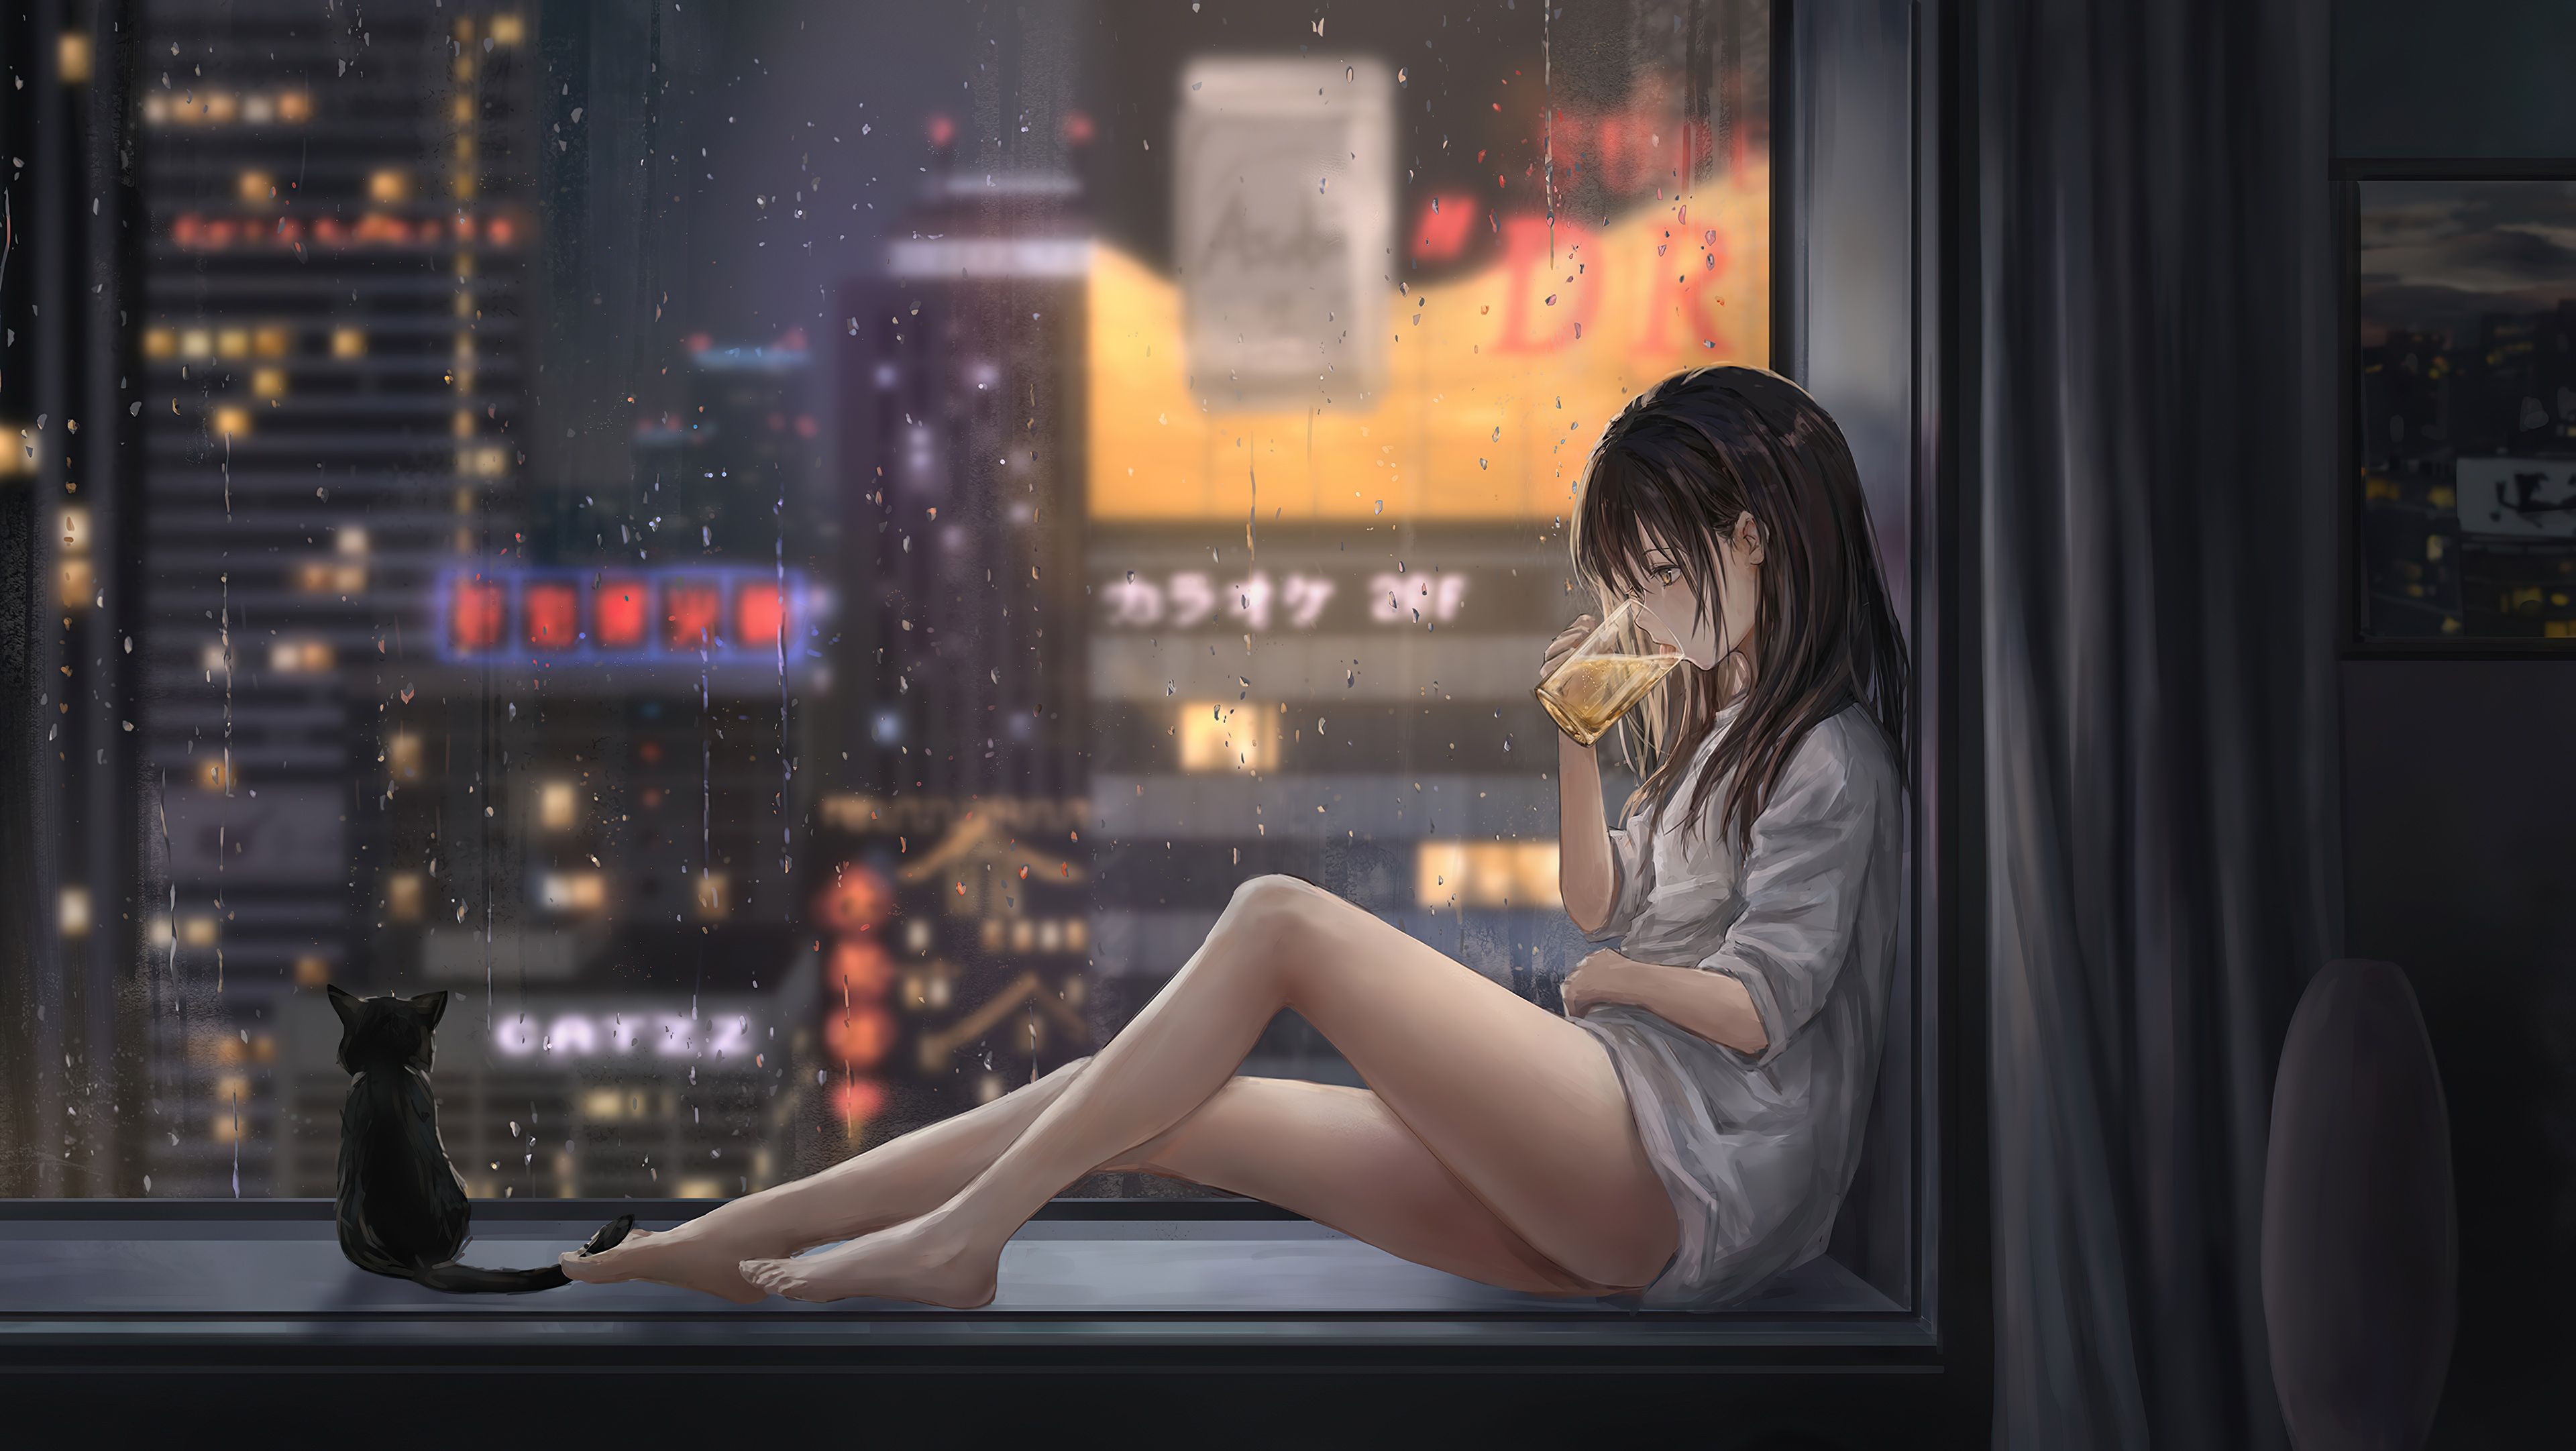 Night Rain | Anime scenery, Landscape wallpaper, Rain wallpapers